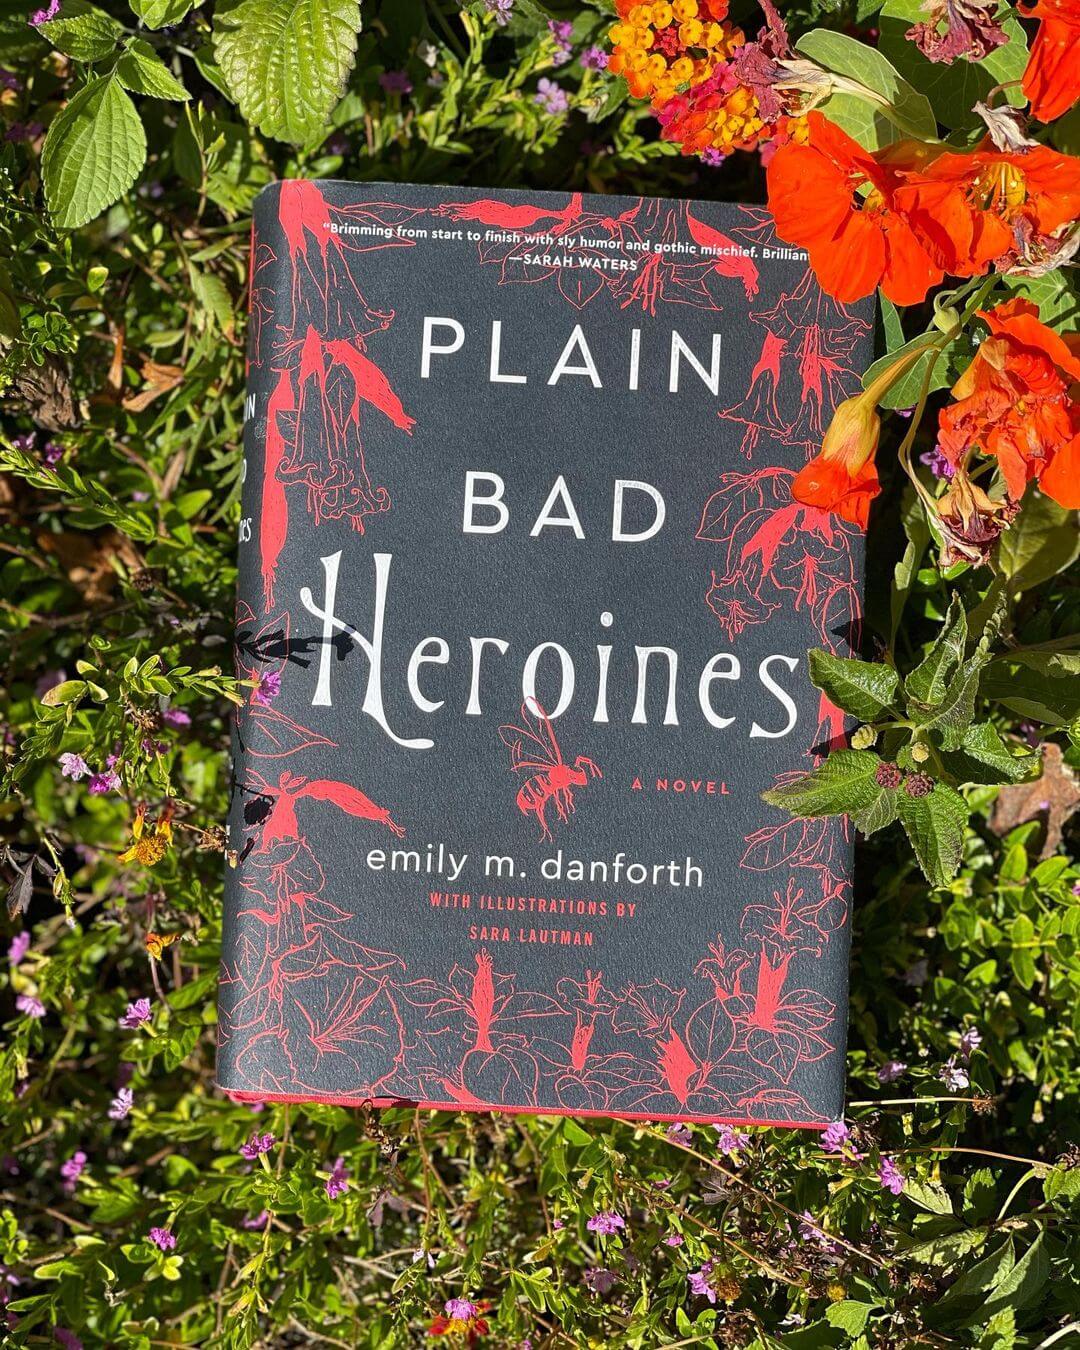 plain, bad heroines by emily m danforth